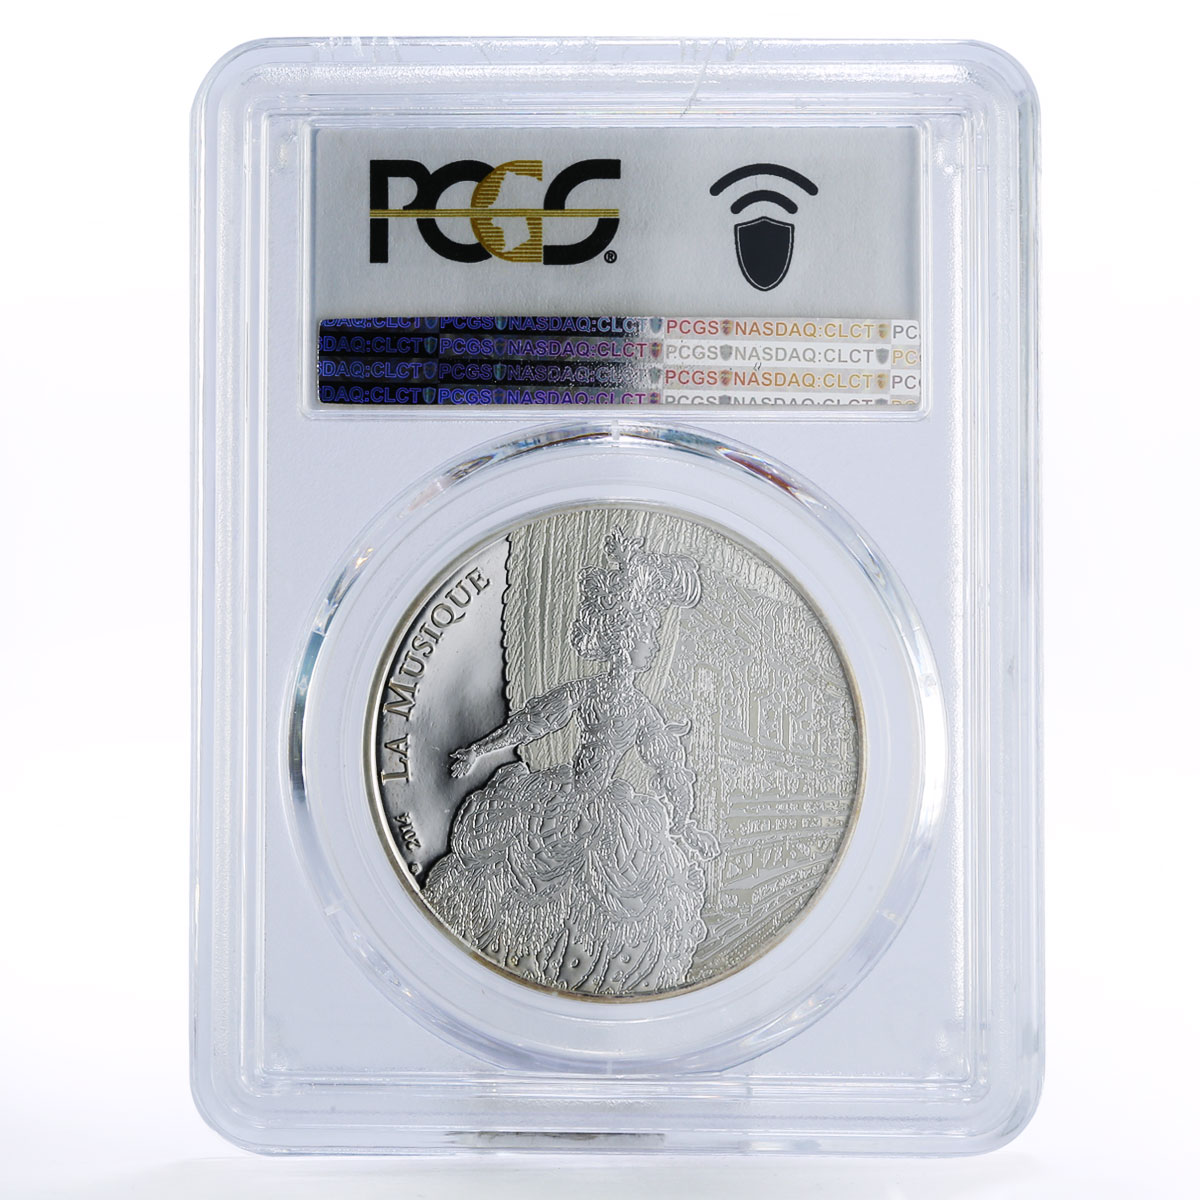 France 10 euro 250th Anniversary of Rameau's Death PR69 PCGS silver coin 2014